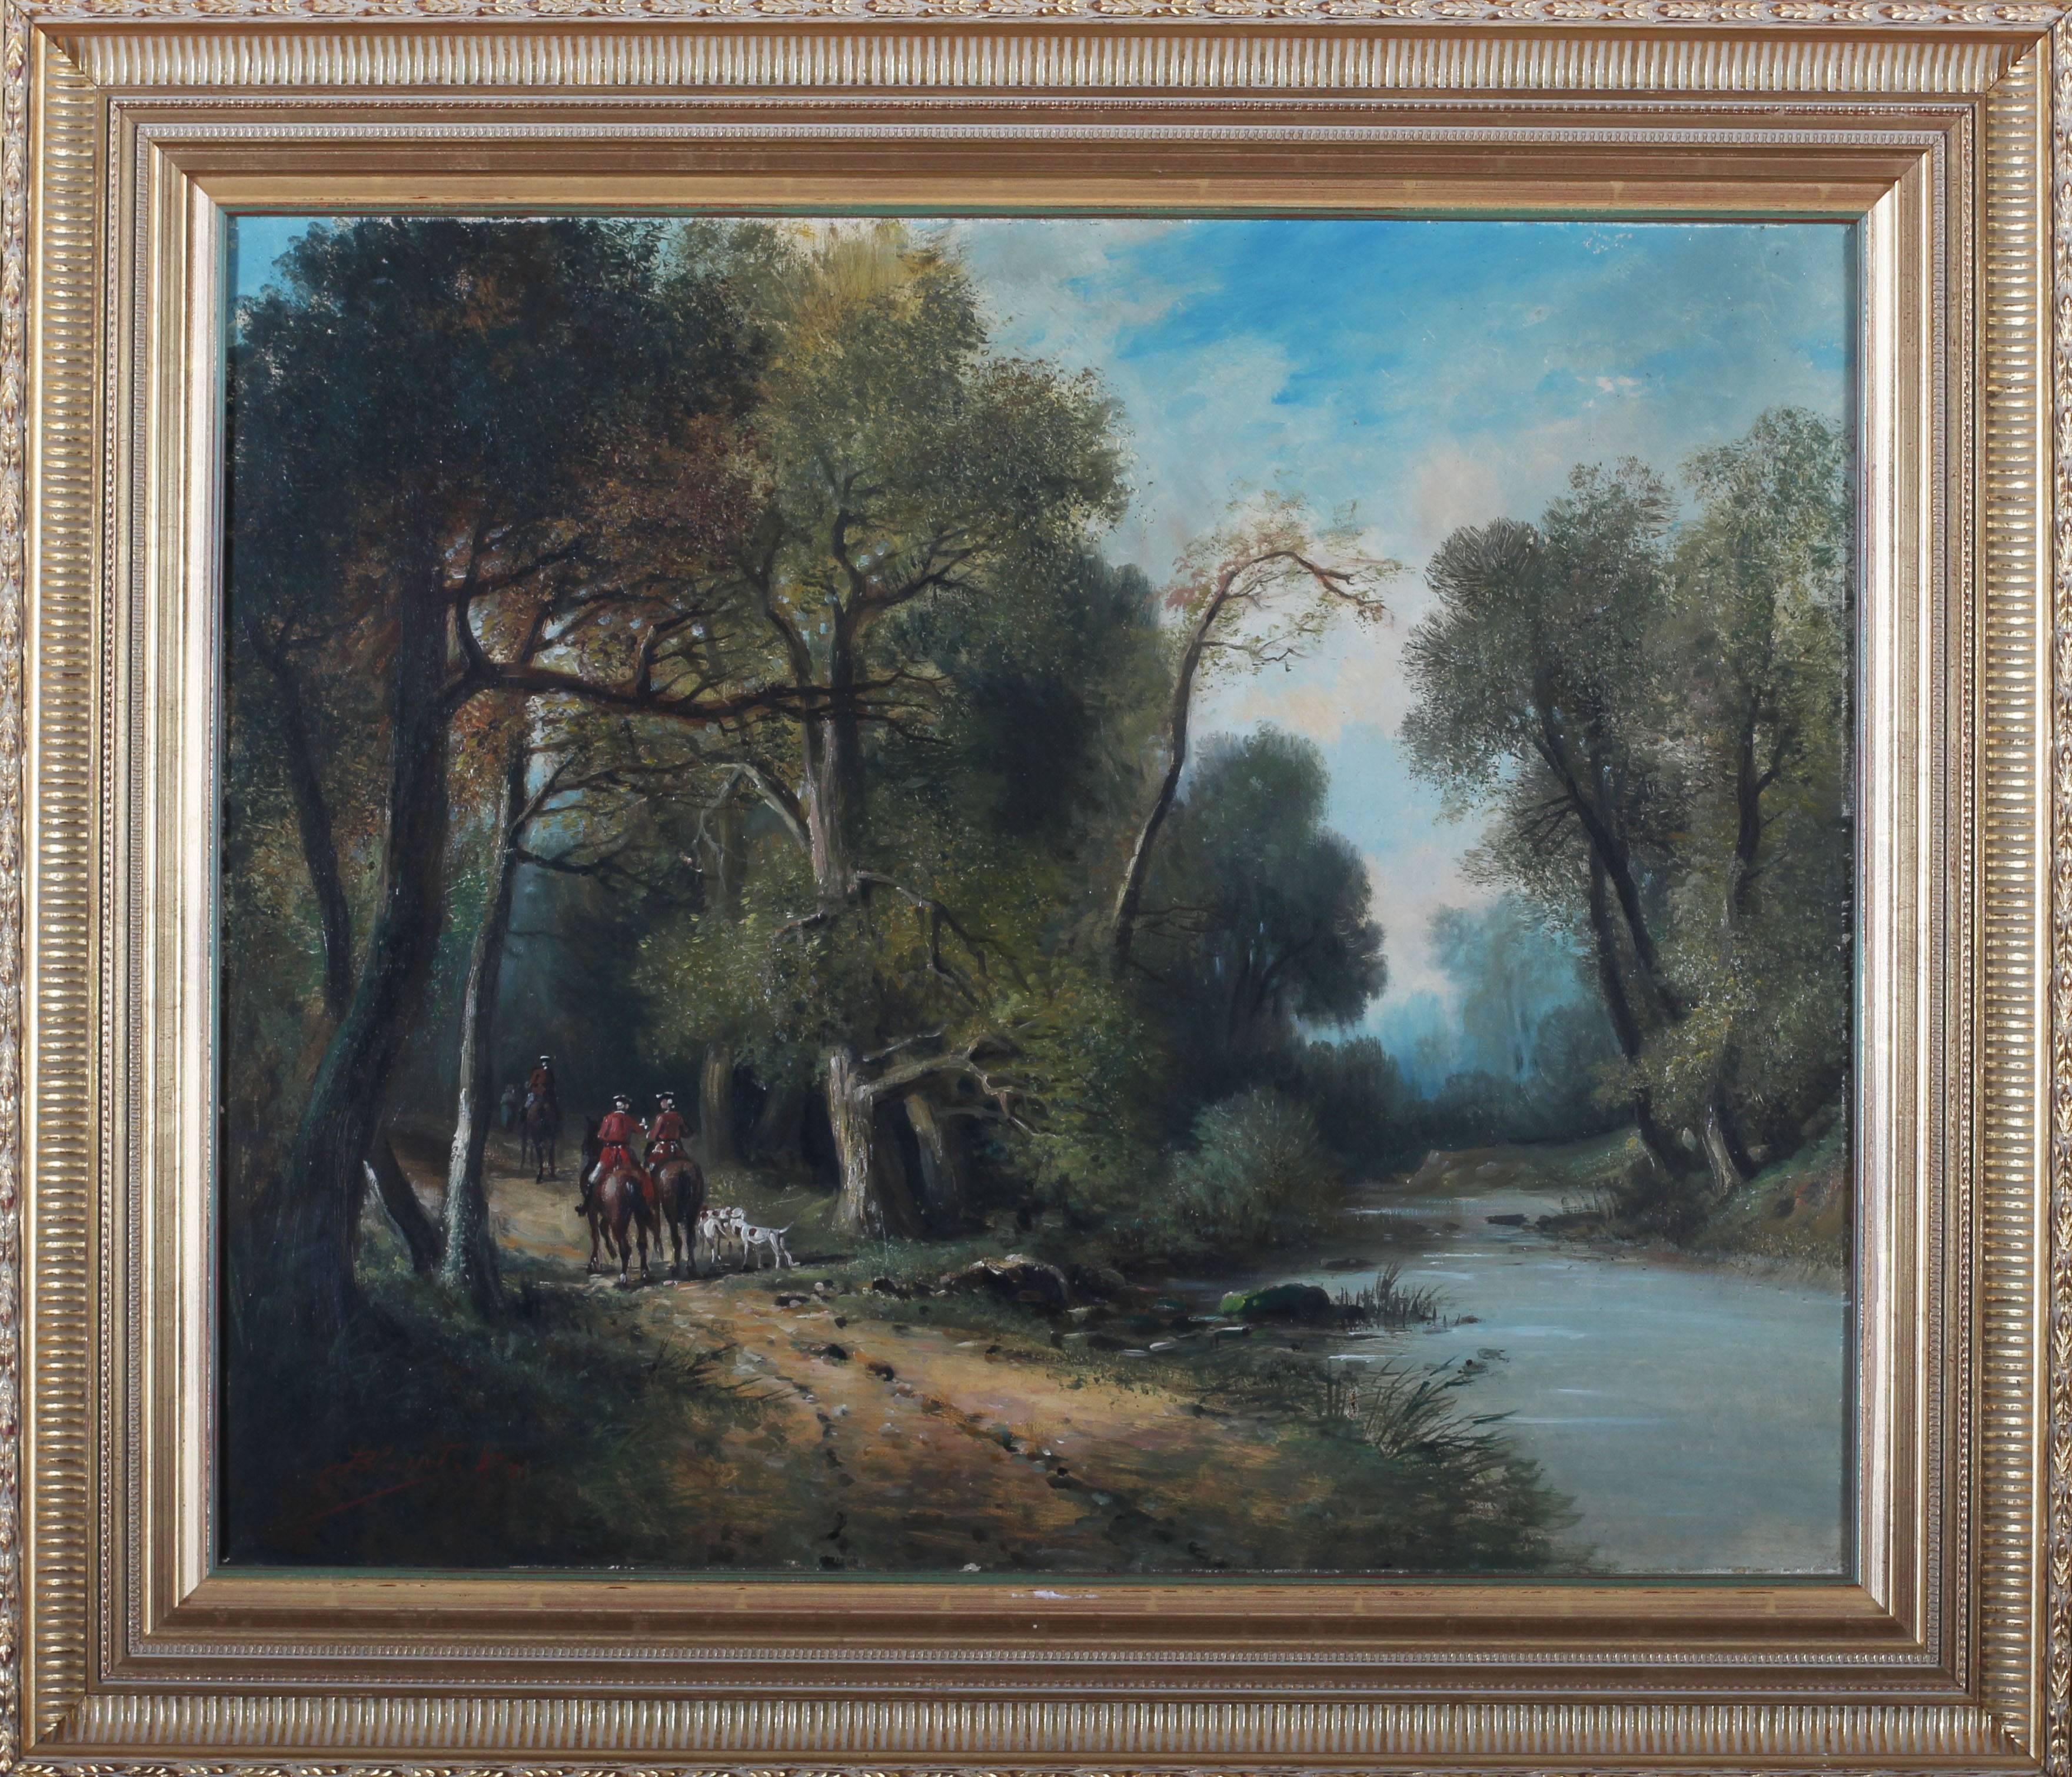 Eugene Blasset, circa 1887
‘Huntsman at a riverside track’
Oil on canvas
Signed and dated ‘Blasset, ’87 (lower left)
21.1/4 x 25.5/8in. (excluding frame)
28 x 32.3/8in. (including frame)




